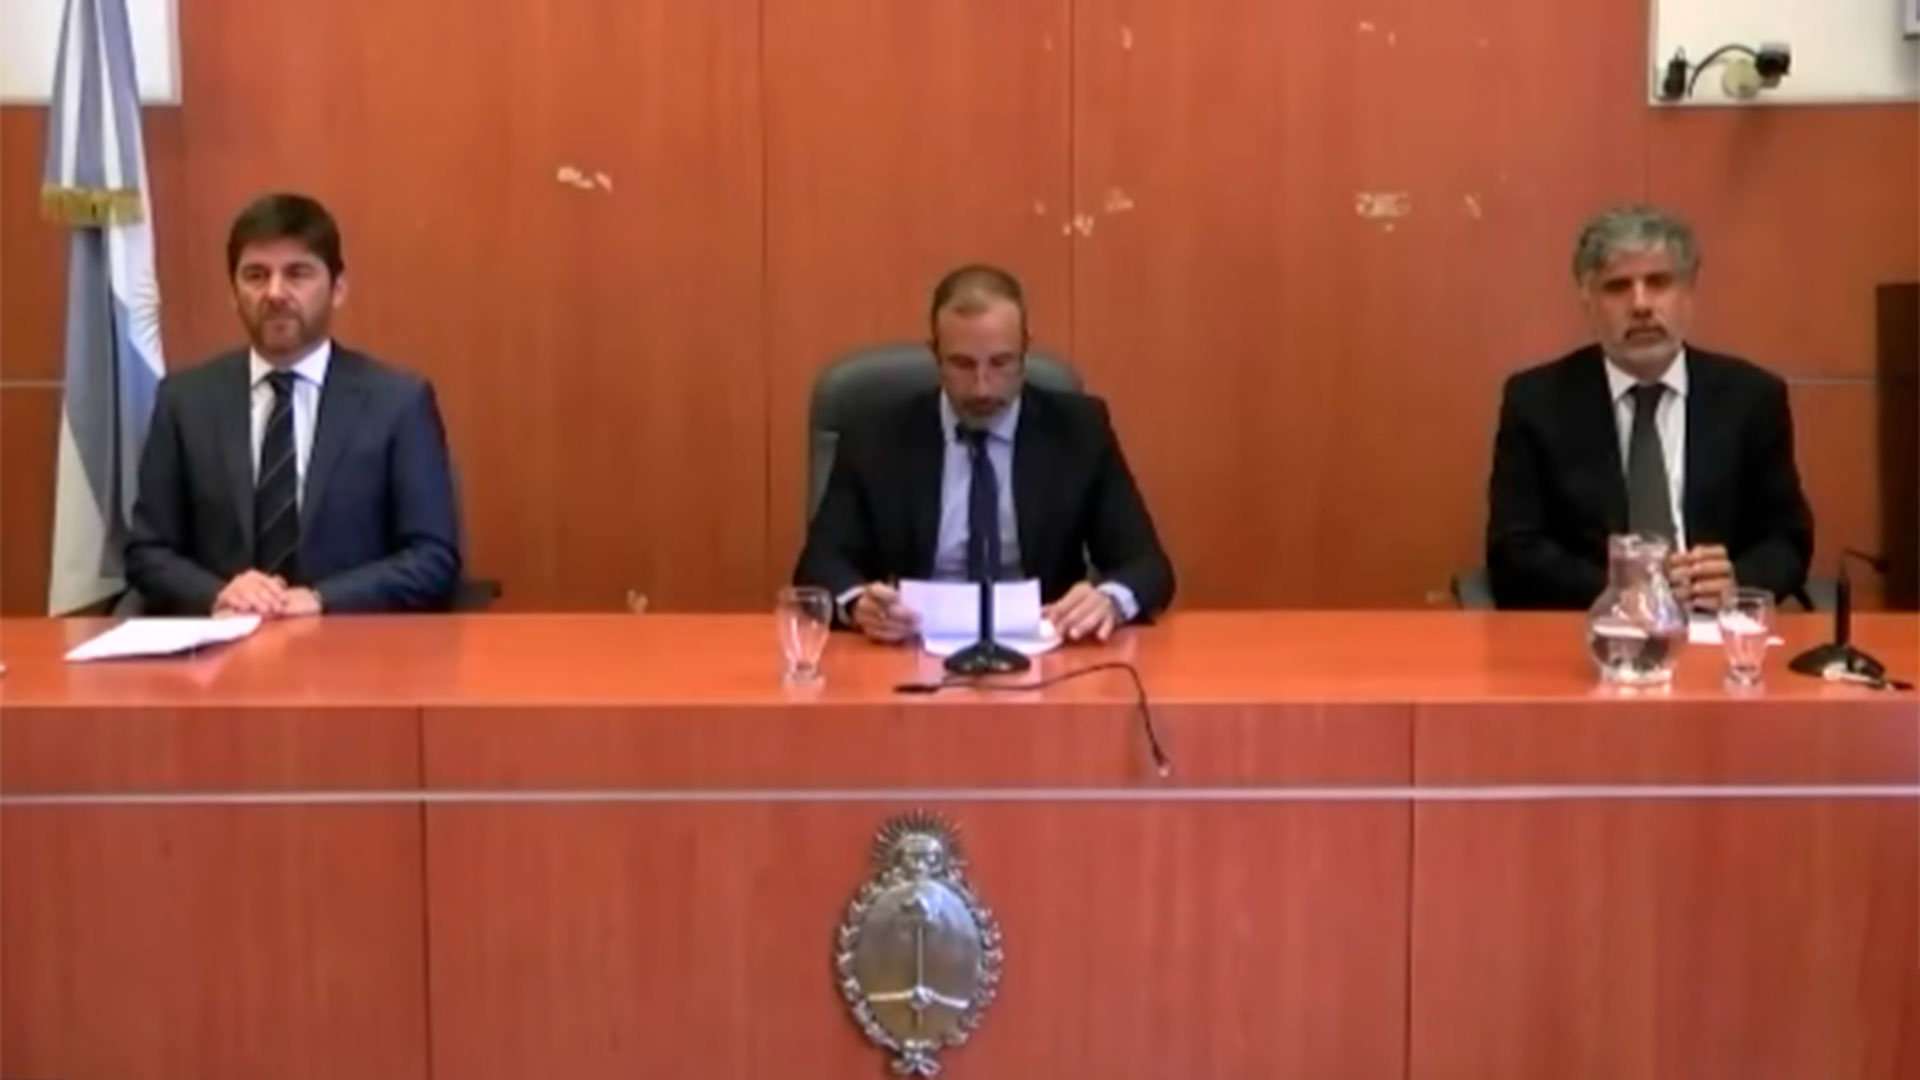 Jorge Gorini, Rodrigo Giménez Uriburu y Andrés Basso. Los tres jueces que juzgaron a la vicepresidenta Cristina Kirchner.